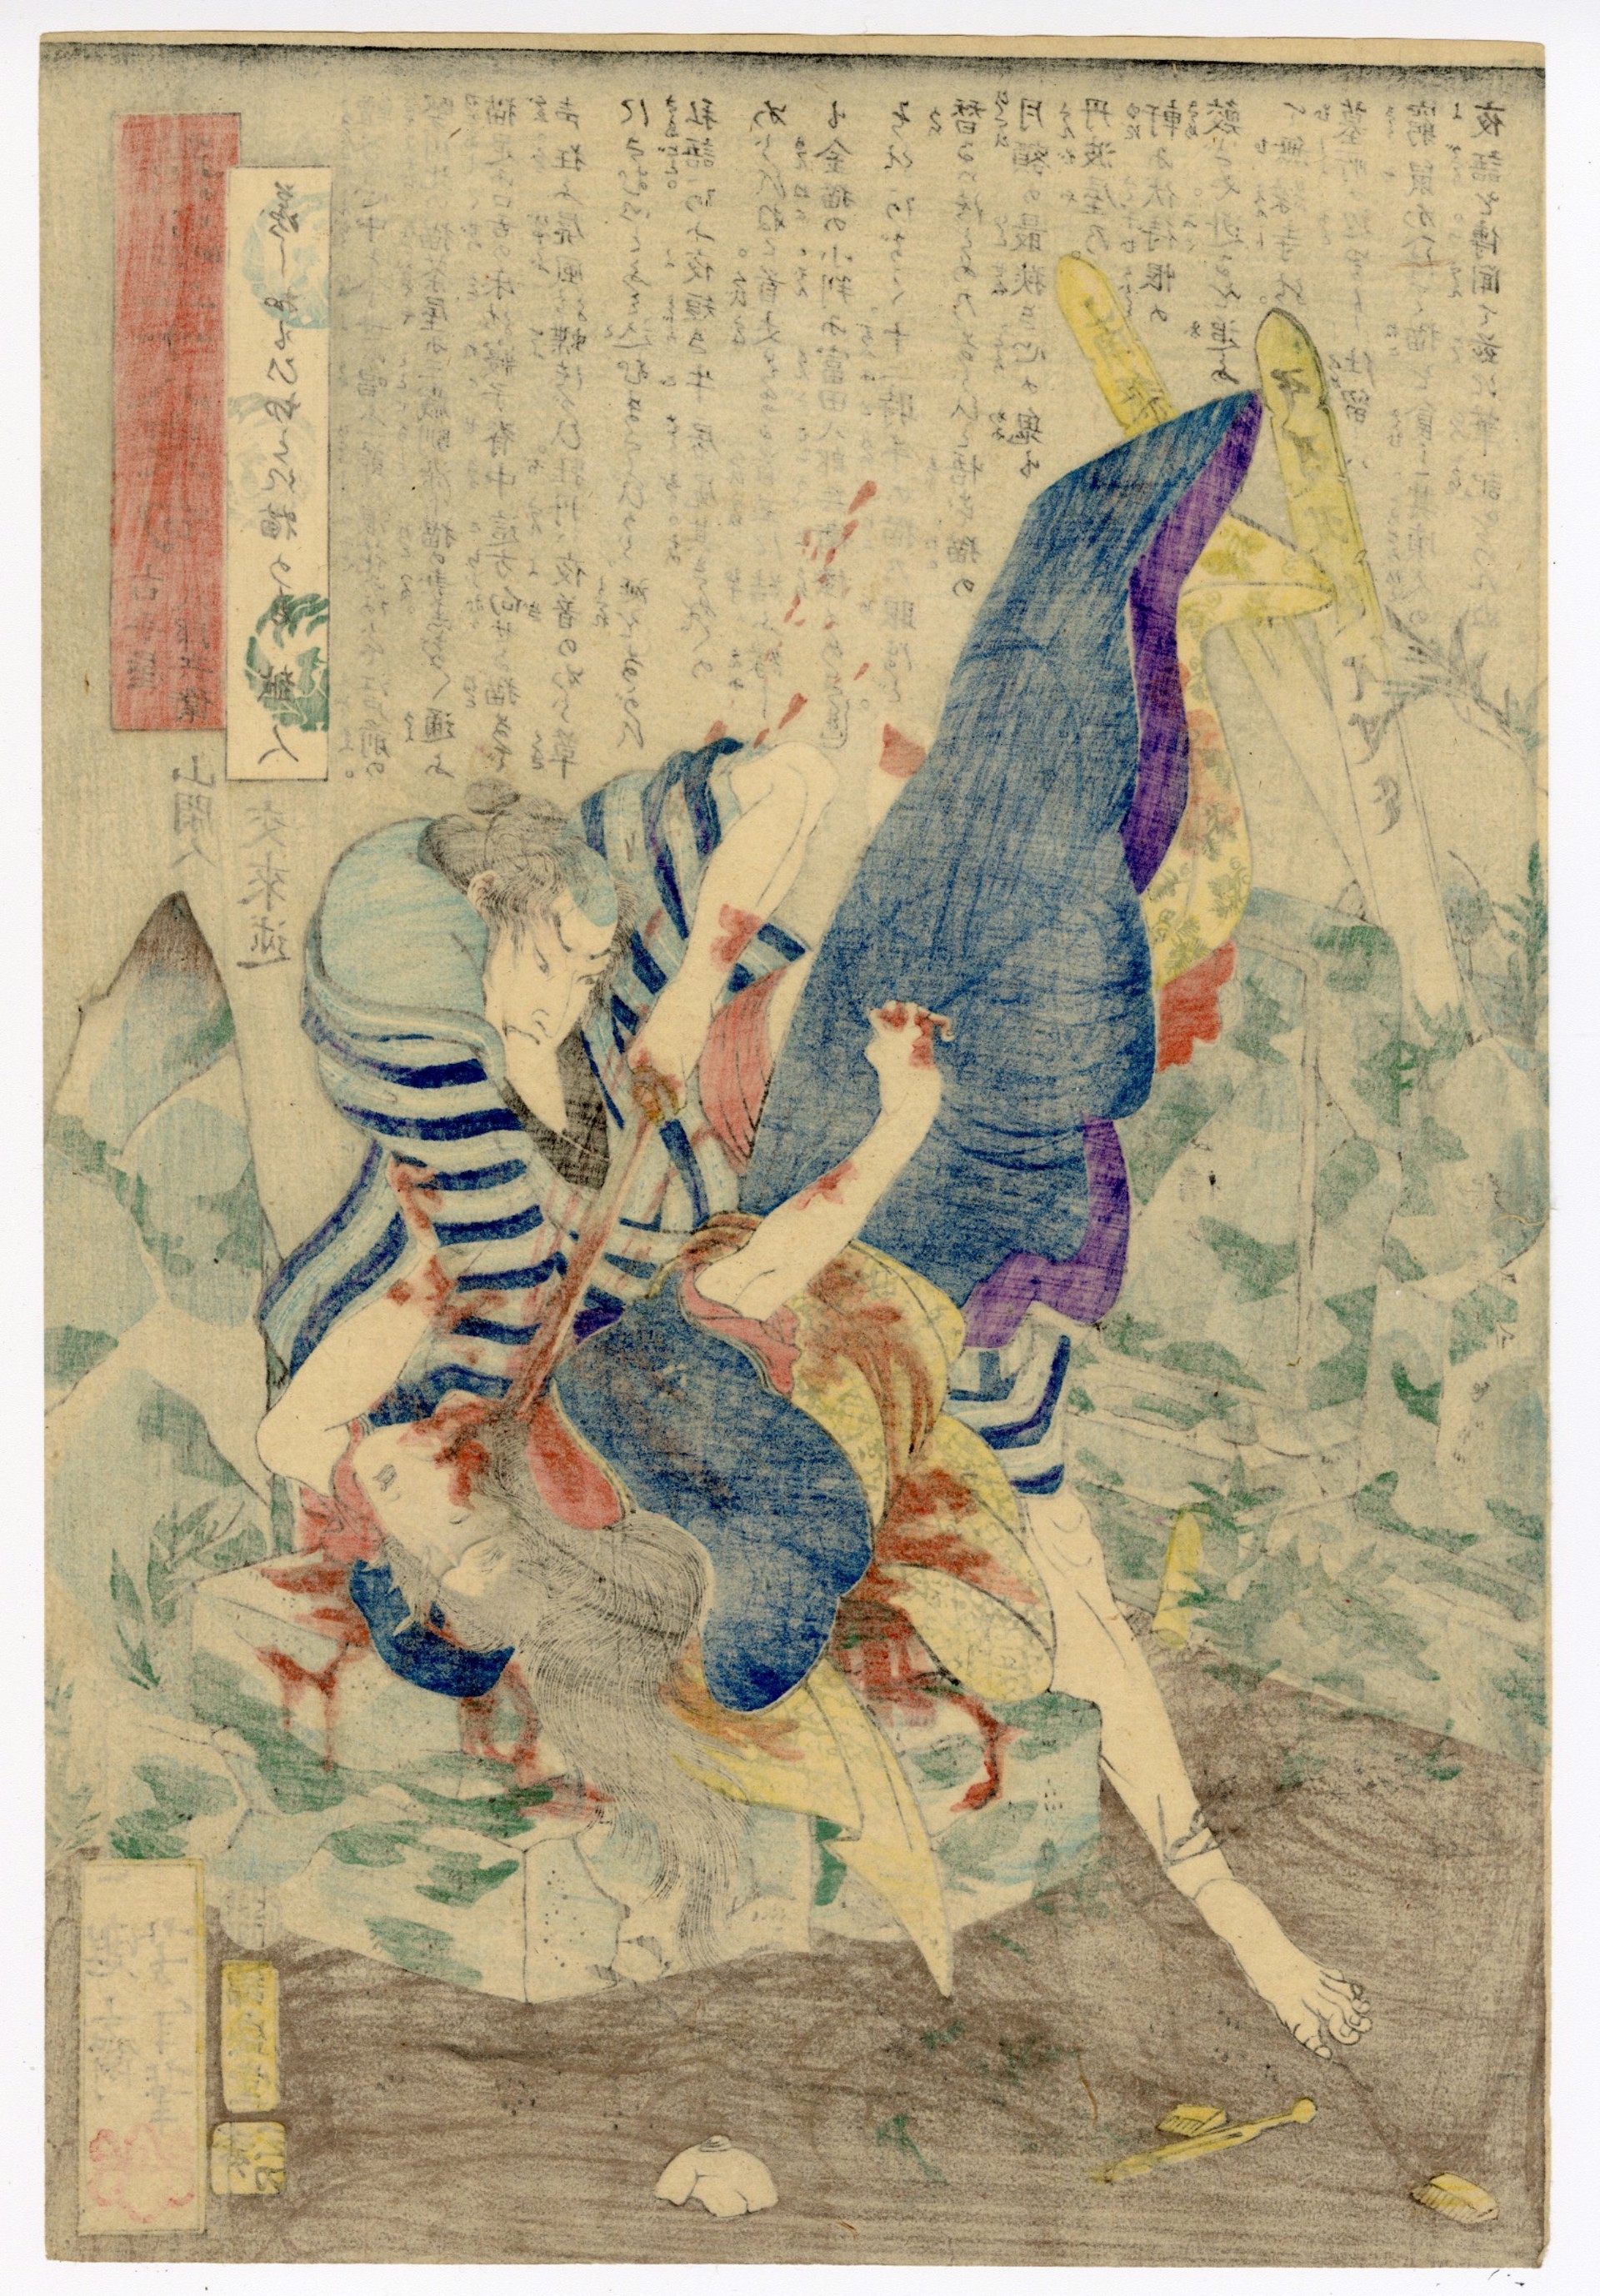 #9 Furuteya Hachirobei Murdering His "Pet Cat" (Lover) in a Temple Cemetary by Yoshitoshi